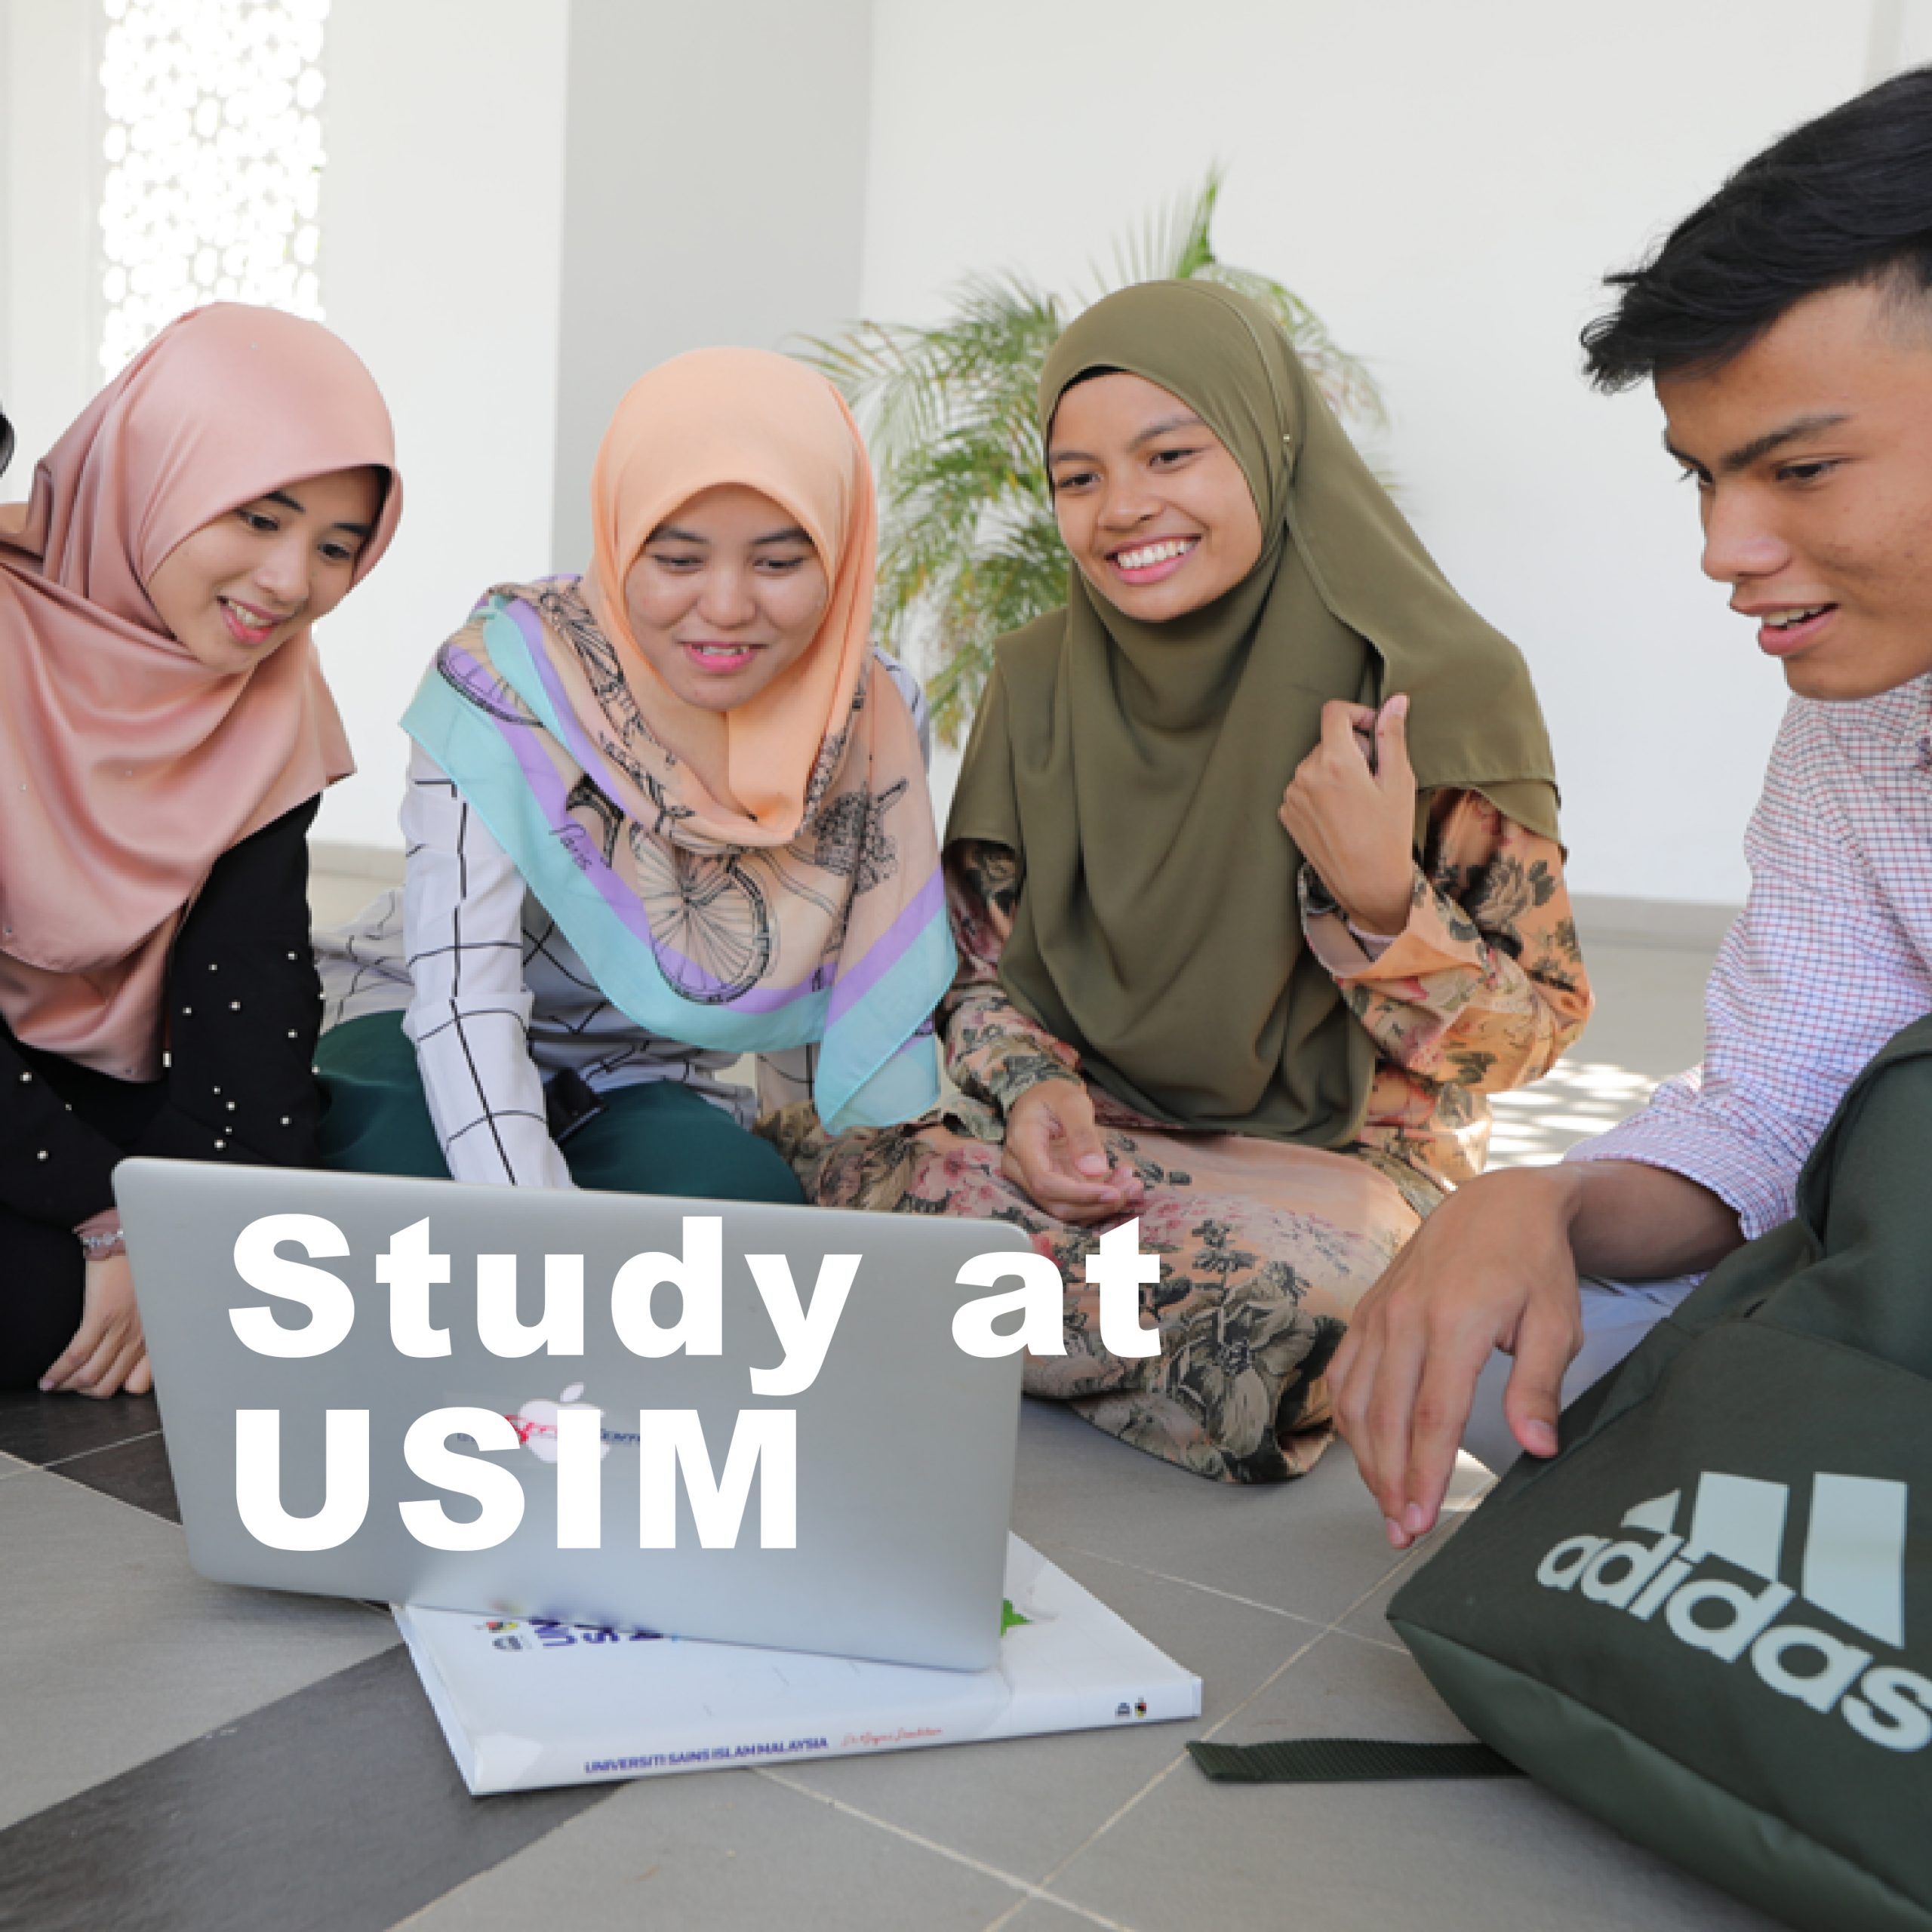 Study at USIM